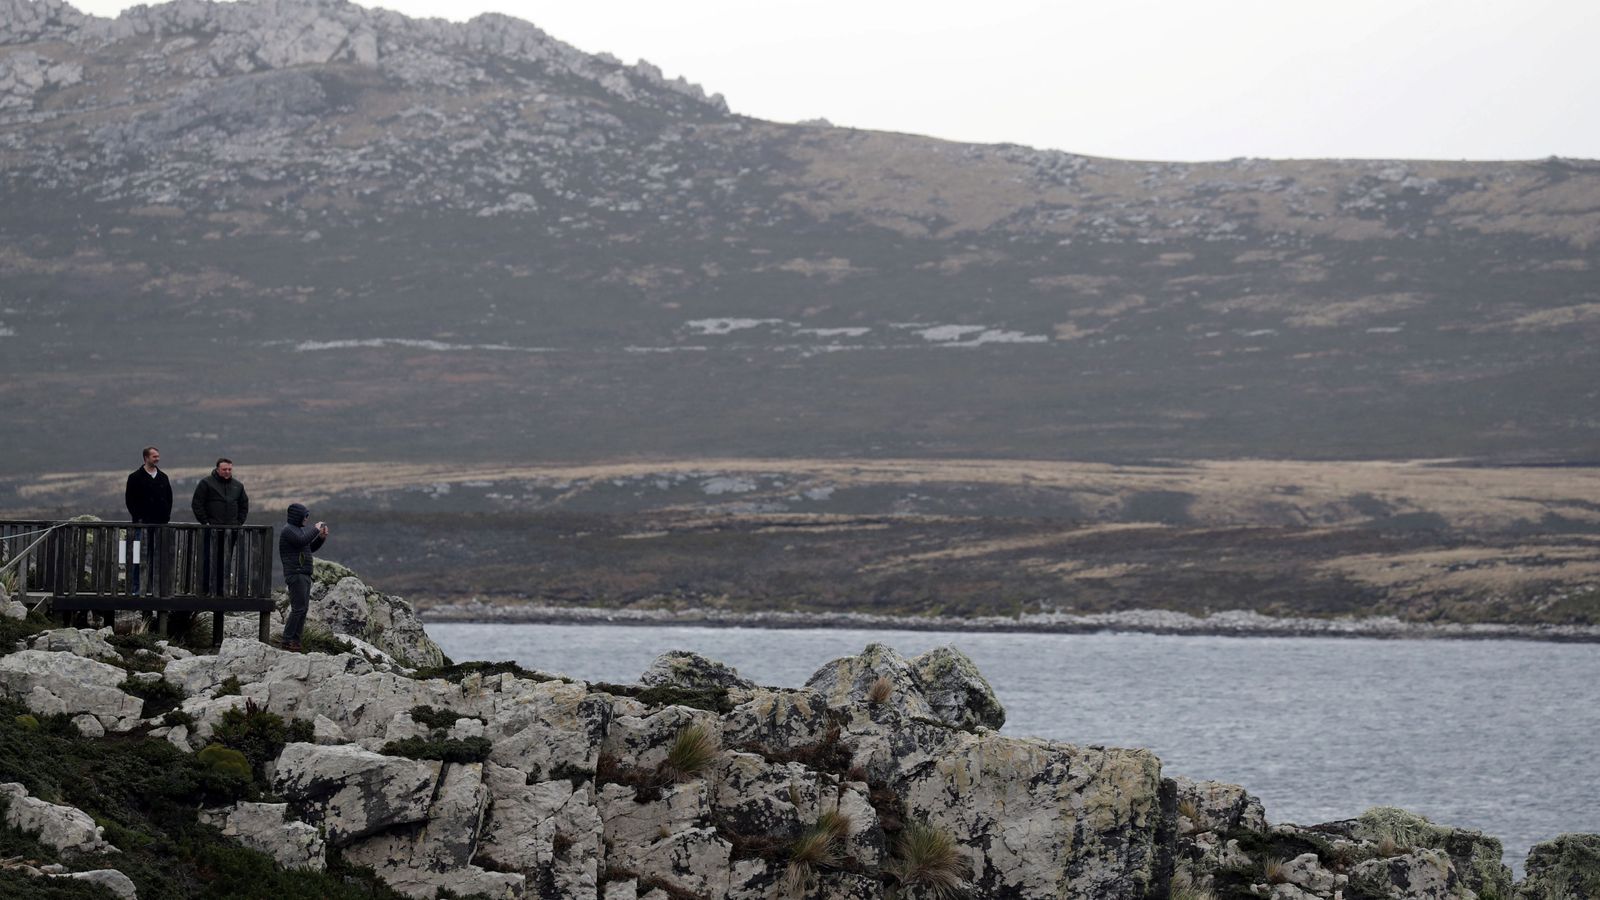 Falkland Islands sovereignty not up for debate, UK warns after ...